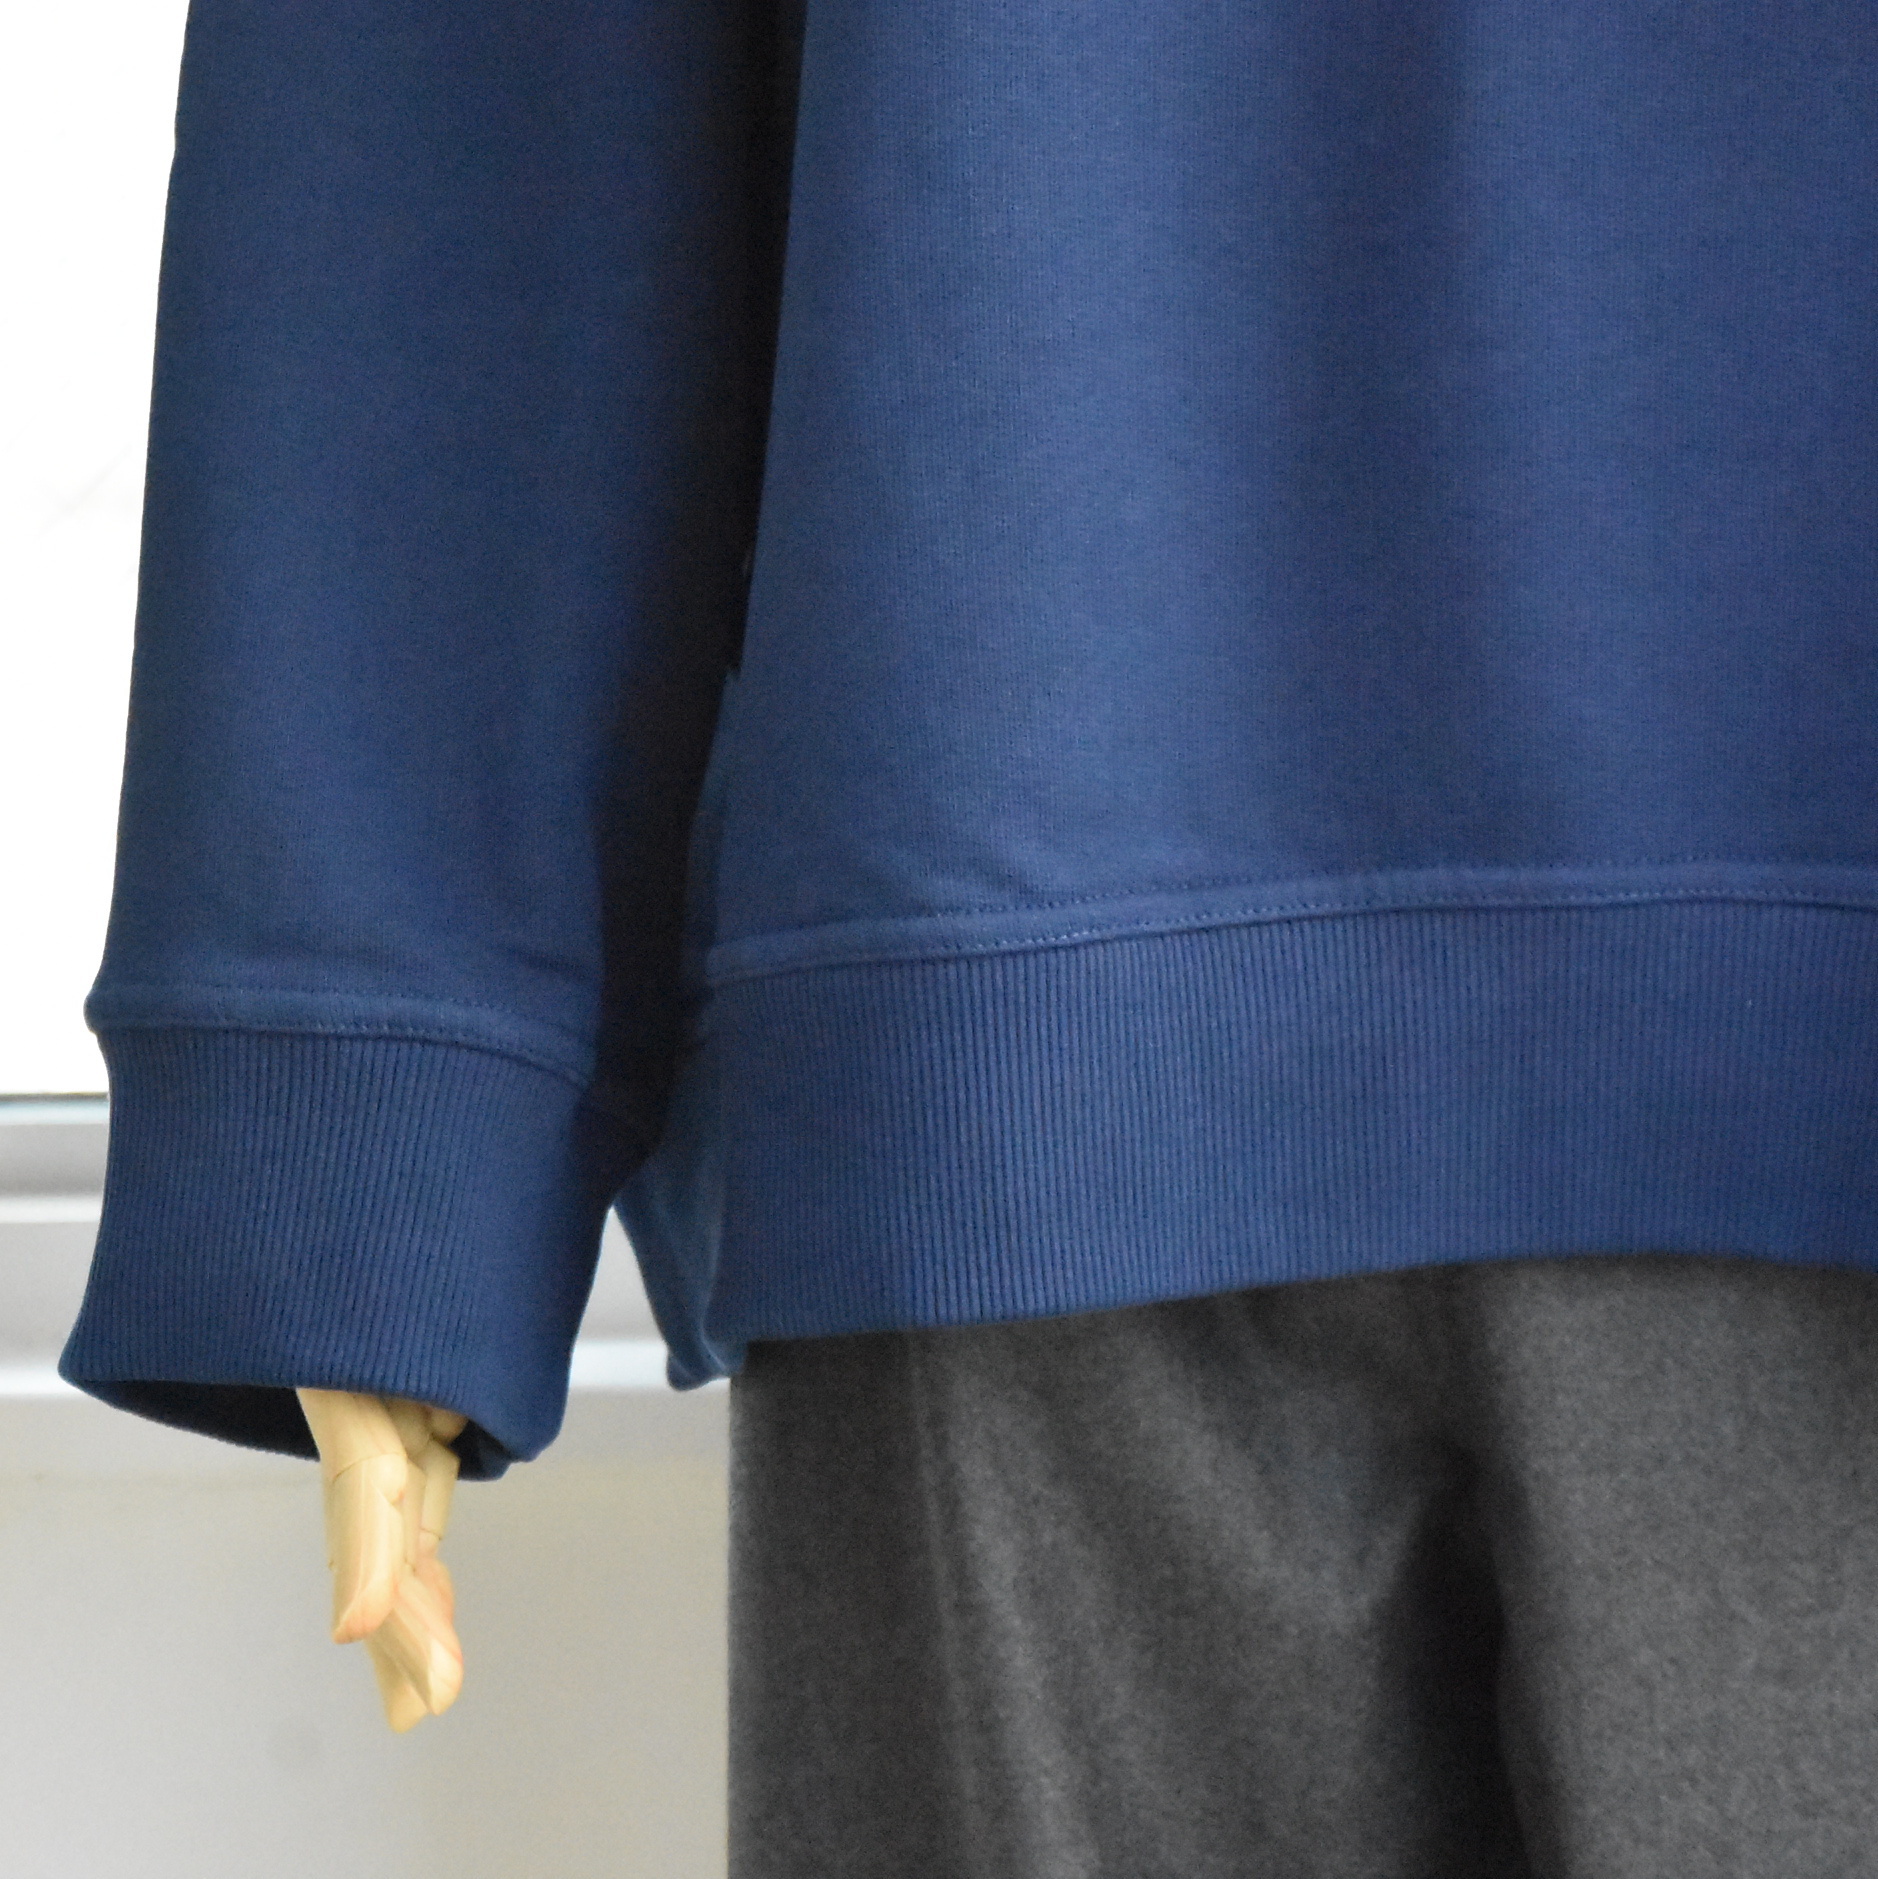 y40% off salezSOFIE D'HOORE(\tB[h[) / Long sleeve C-neck sweatshirt with top stichy2FWJz #TASTE-AA(12)